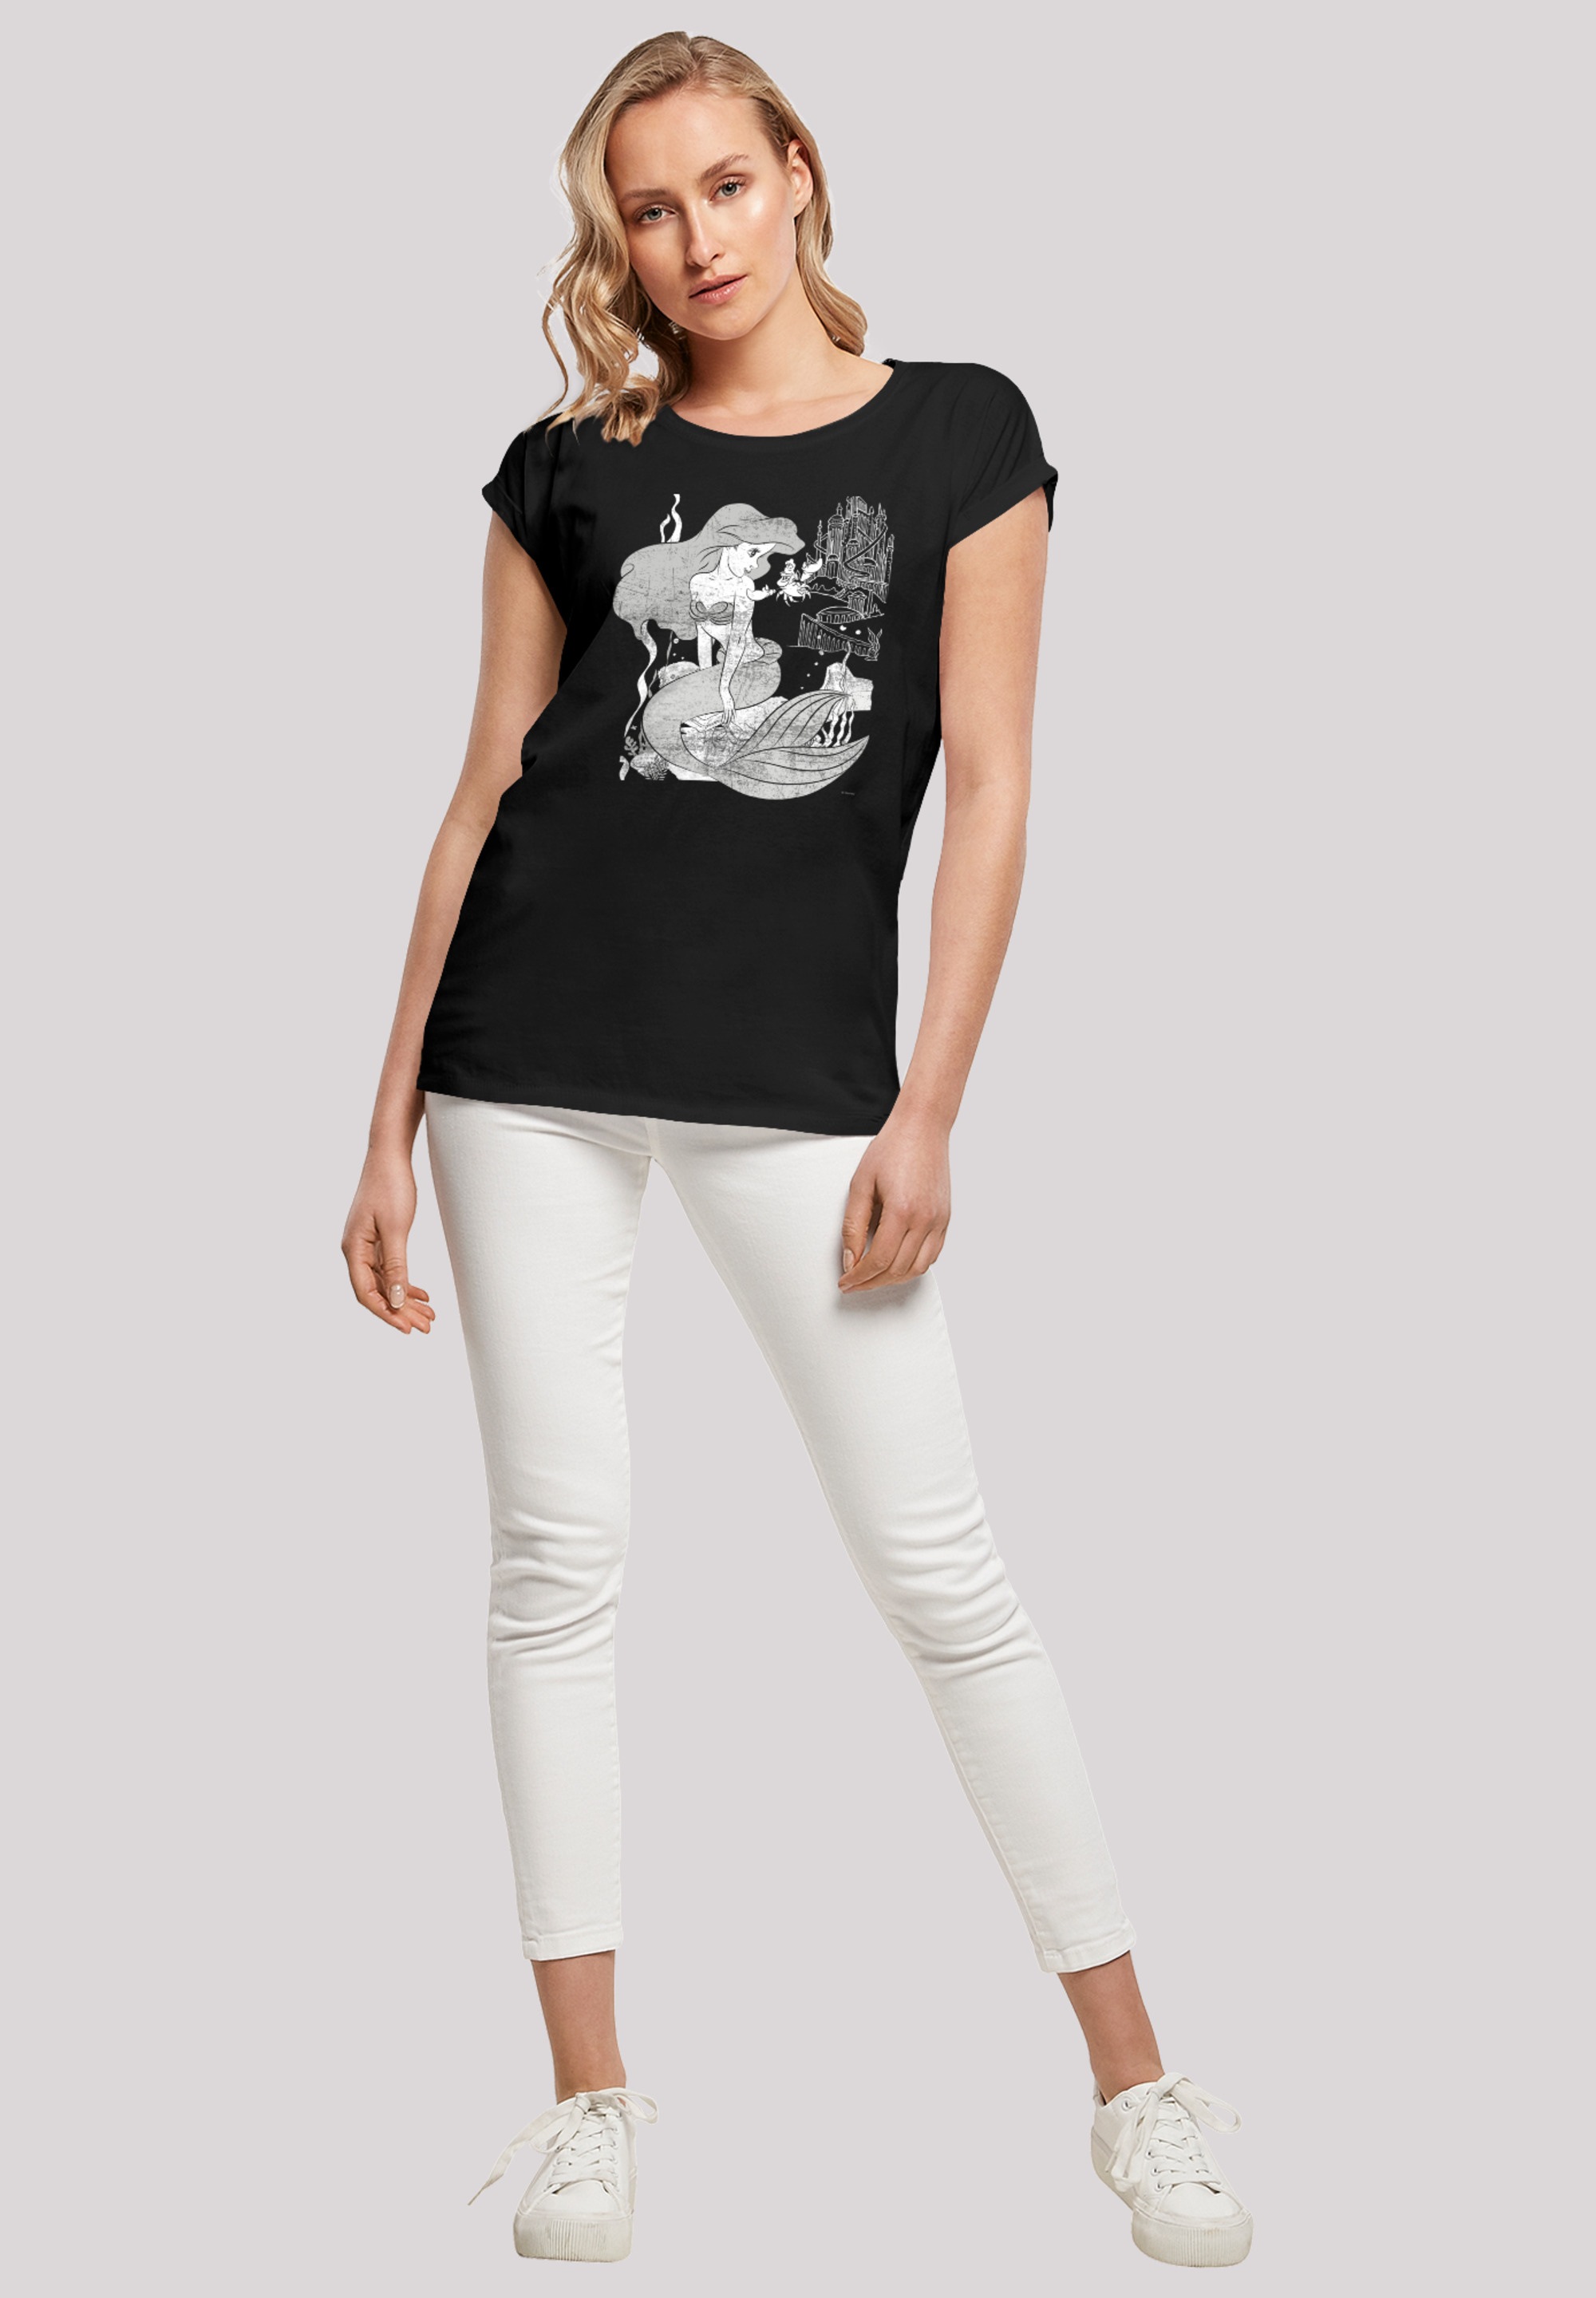 Top-Verkaufserfolg F4NT4STIC T-Shirt »Disney Arielle die | kaufen Print walking I\'m Meerjungfrau«